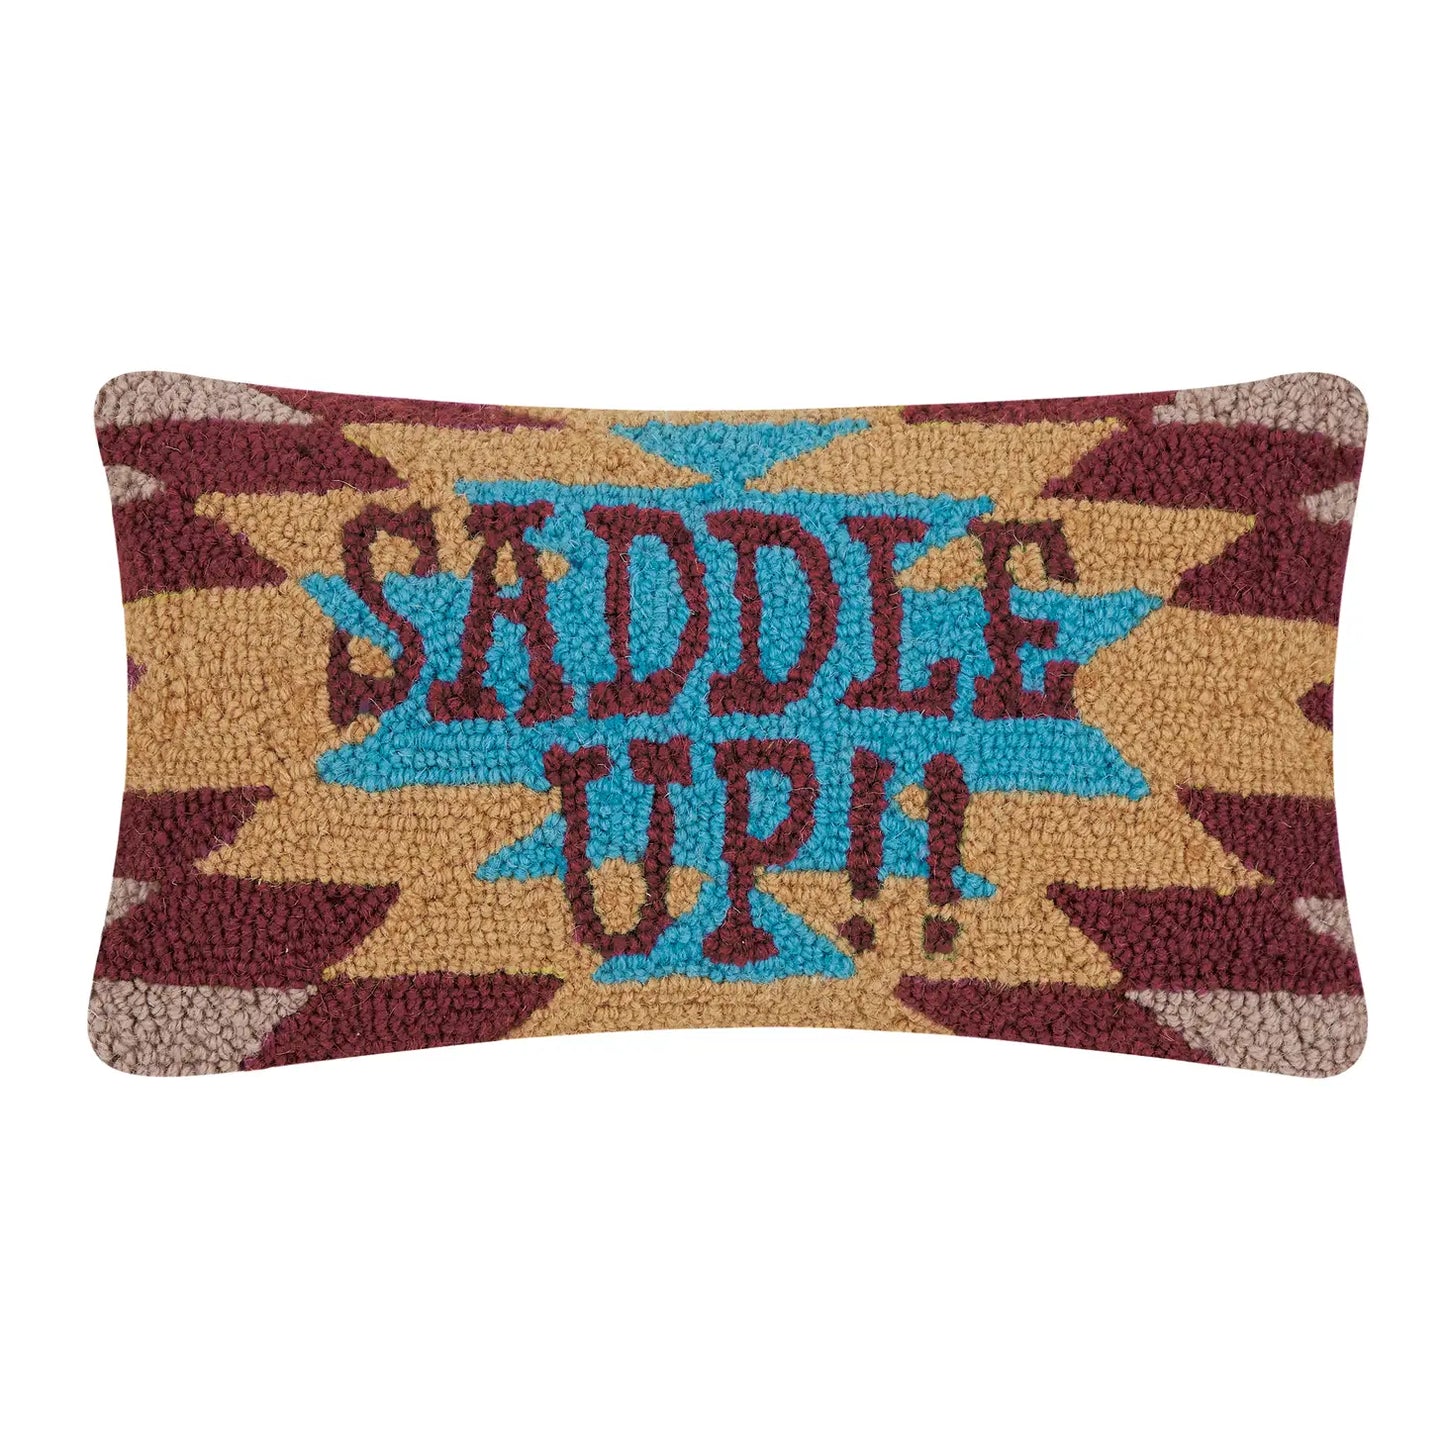 Saddle Up Cushion PRE ORDER